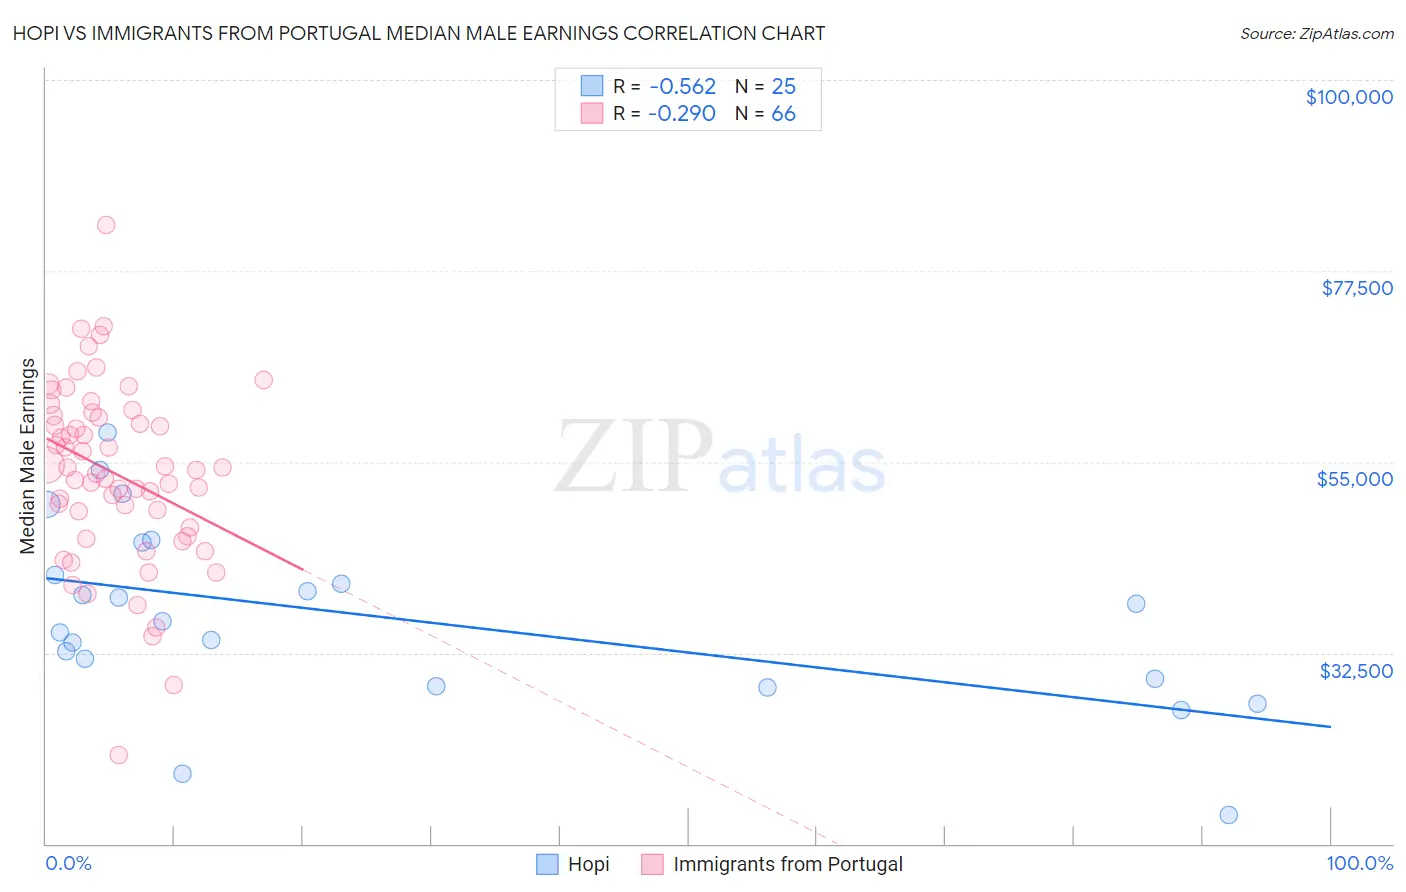 Hopi vs Immigrants from Portugal Median Male Earnings